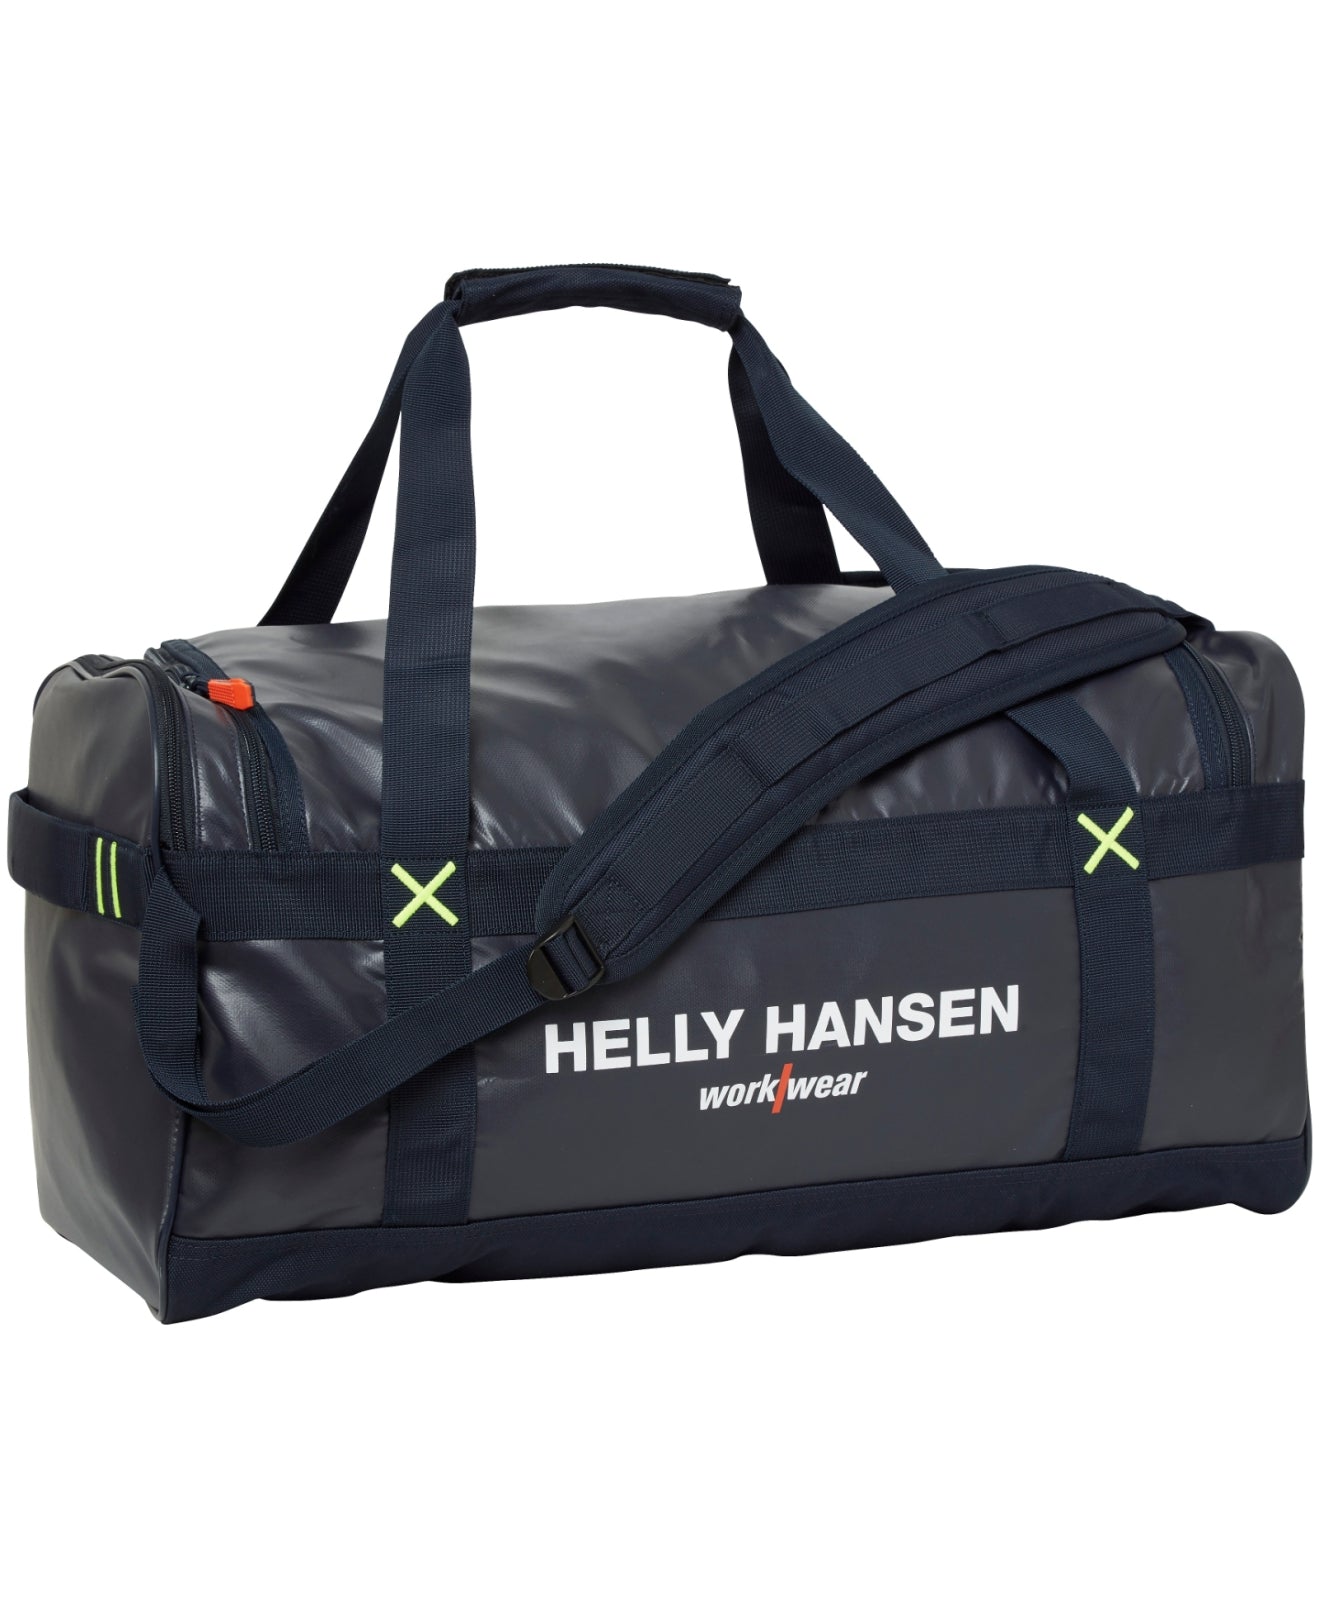 Geantă voiaj Helly Hansen Workwear 50 litri, diferite culori